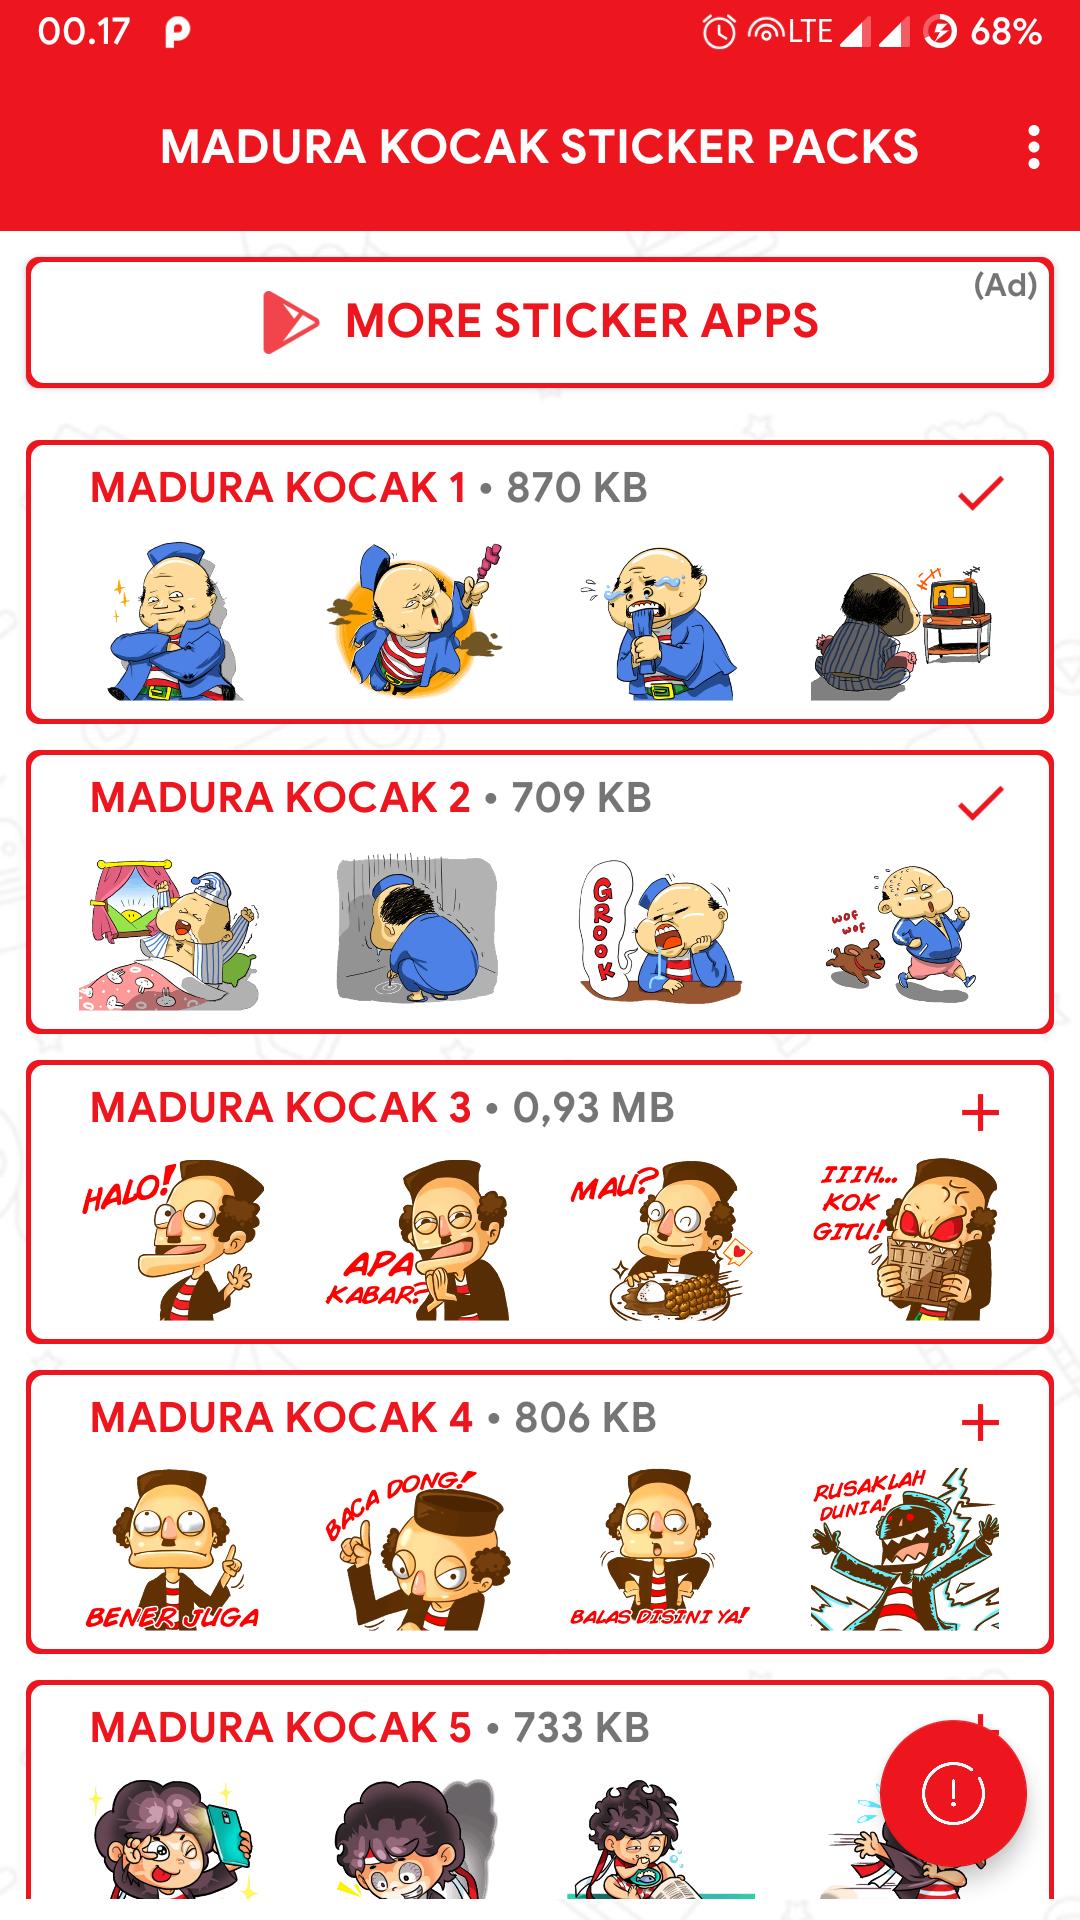 Stiker Madura Kocak For Android Apk Download